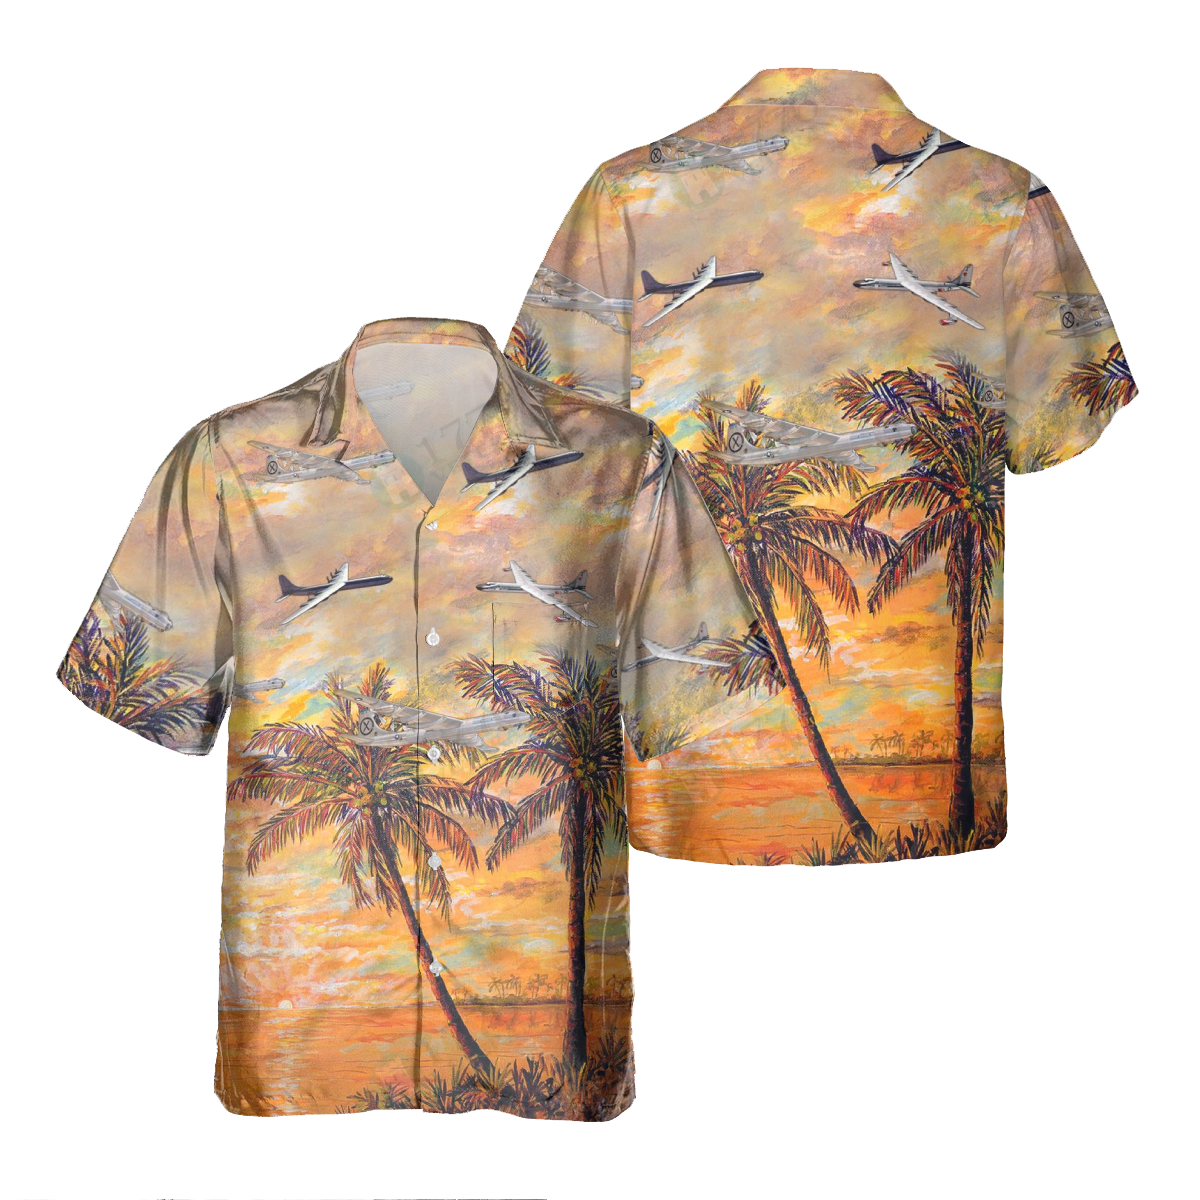 B-36 PEACEMAKER Pocket Hawaiian Shirt/ Hawaiian Shirt for Men Dad Veteran/ Patriot Day